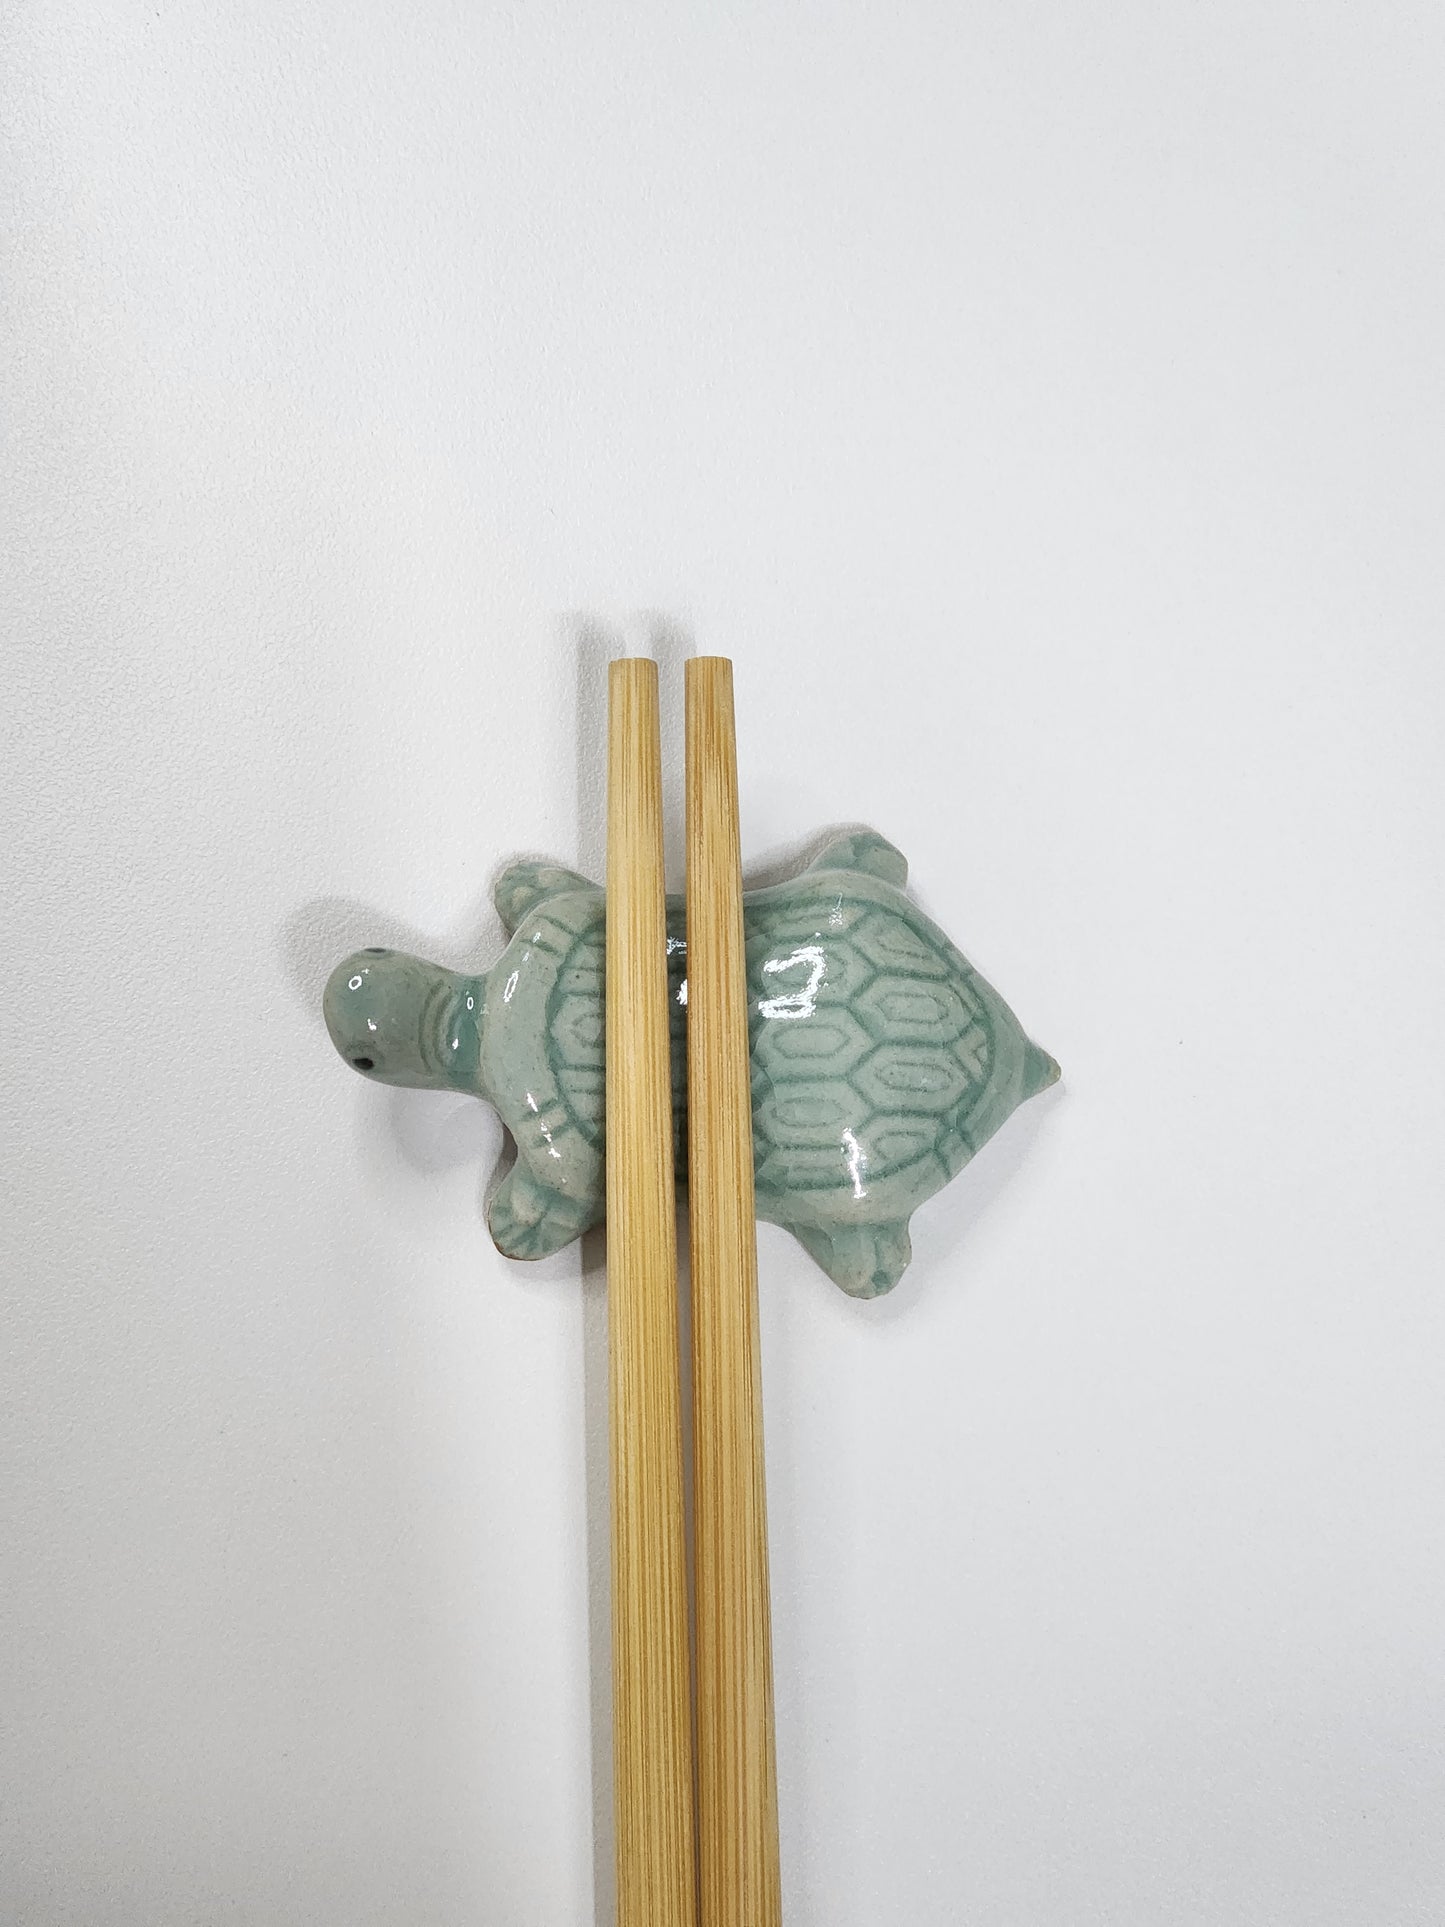 Korean Traditional Celadon Turtle Spoon and Chopsticks Rest 2P set